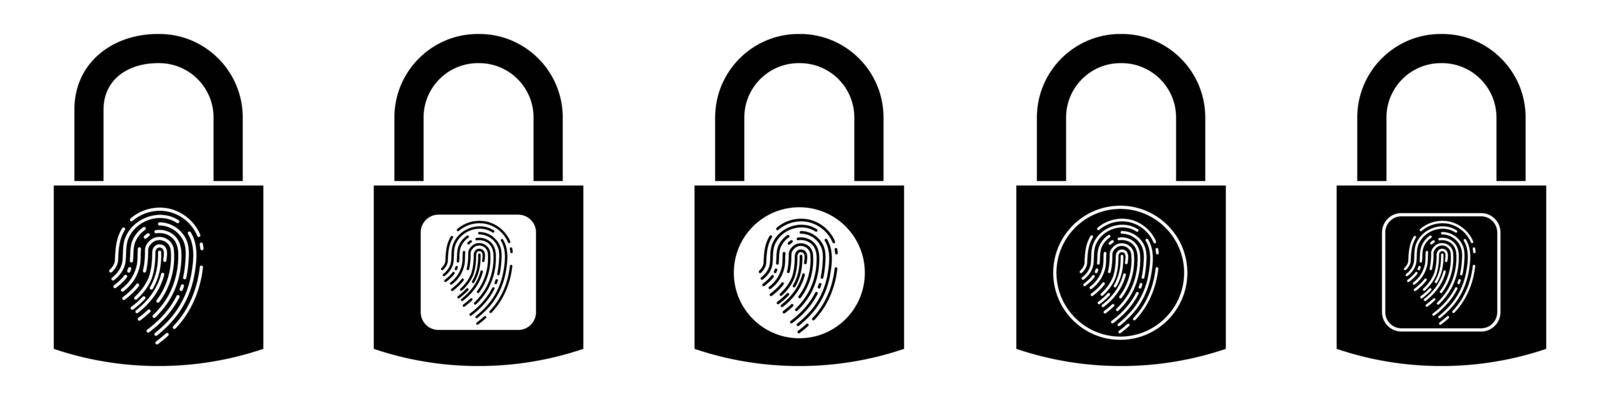 Fingerprint padlock icon. Scan fingerprint icon. Security concept icon. Vector illustration